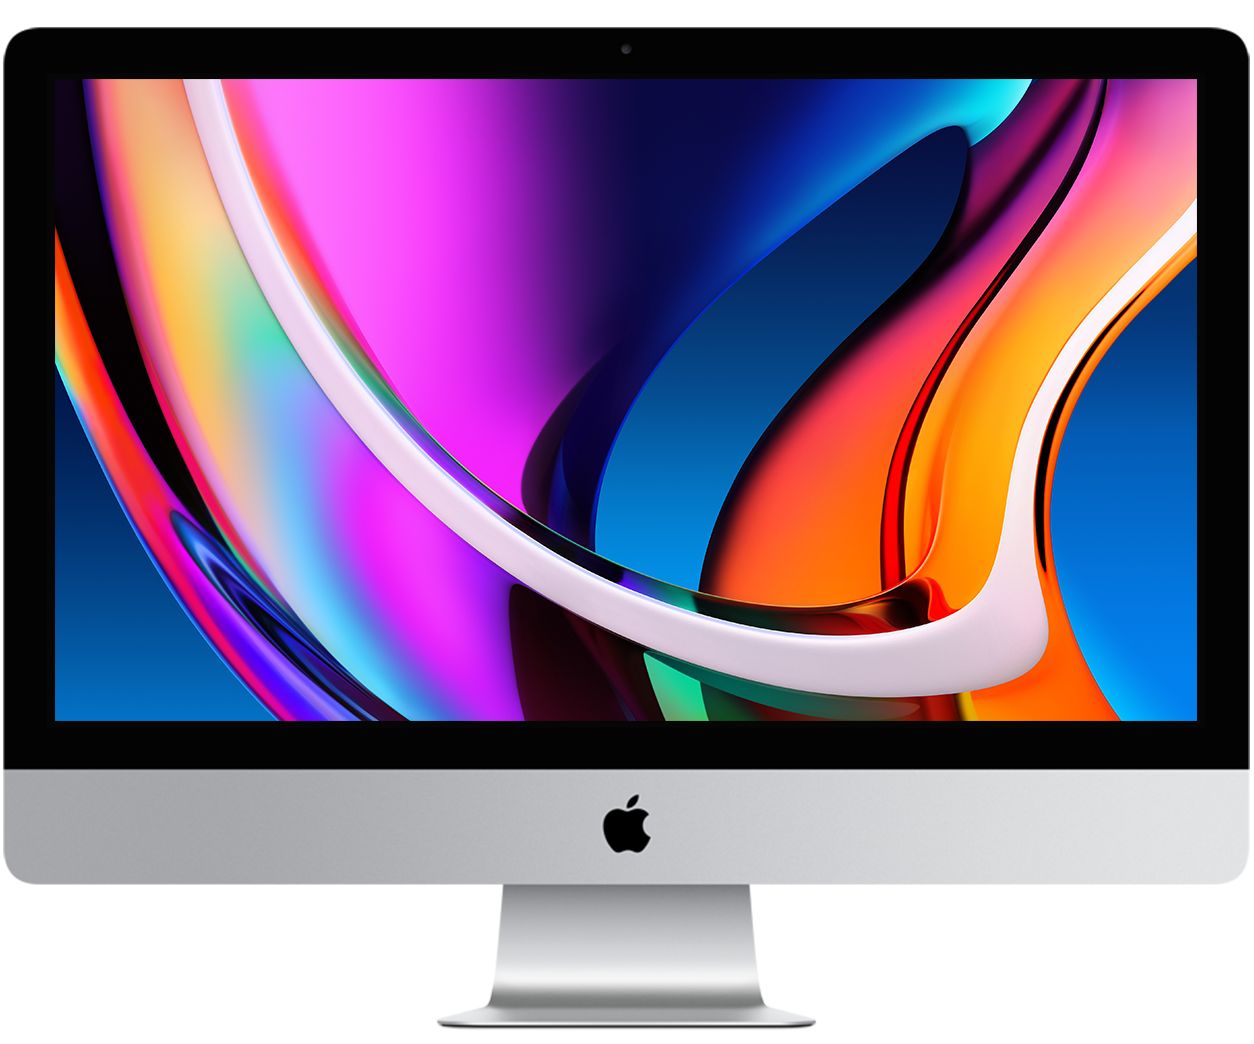 Refurbished iMac 27 inch buy secondhand iUsed